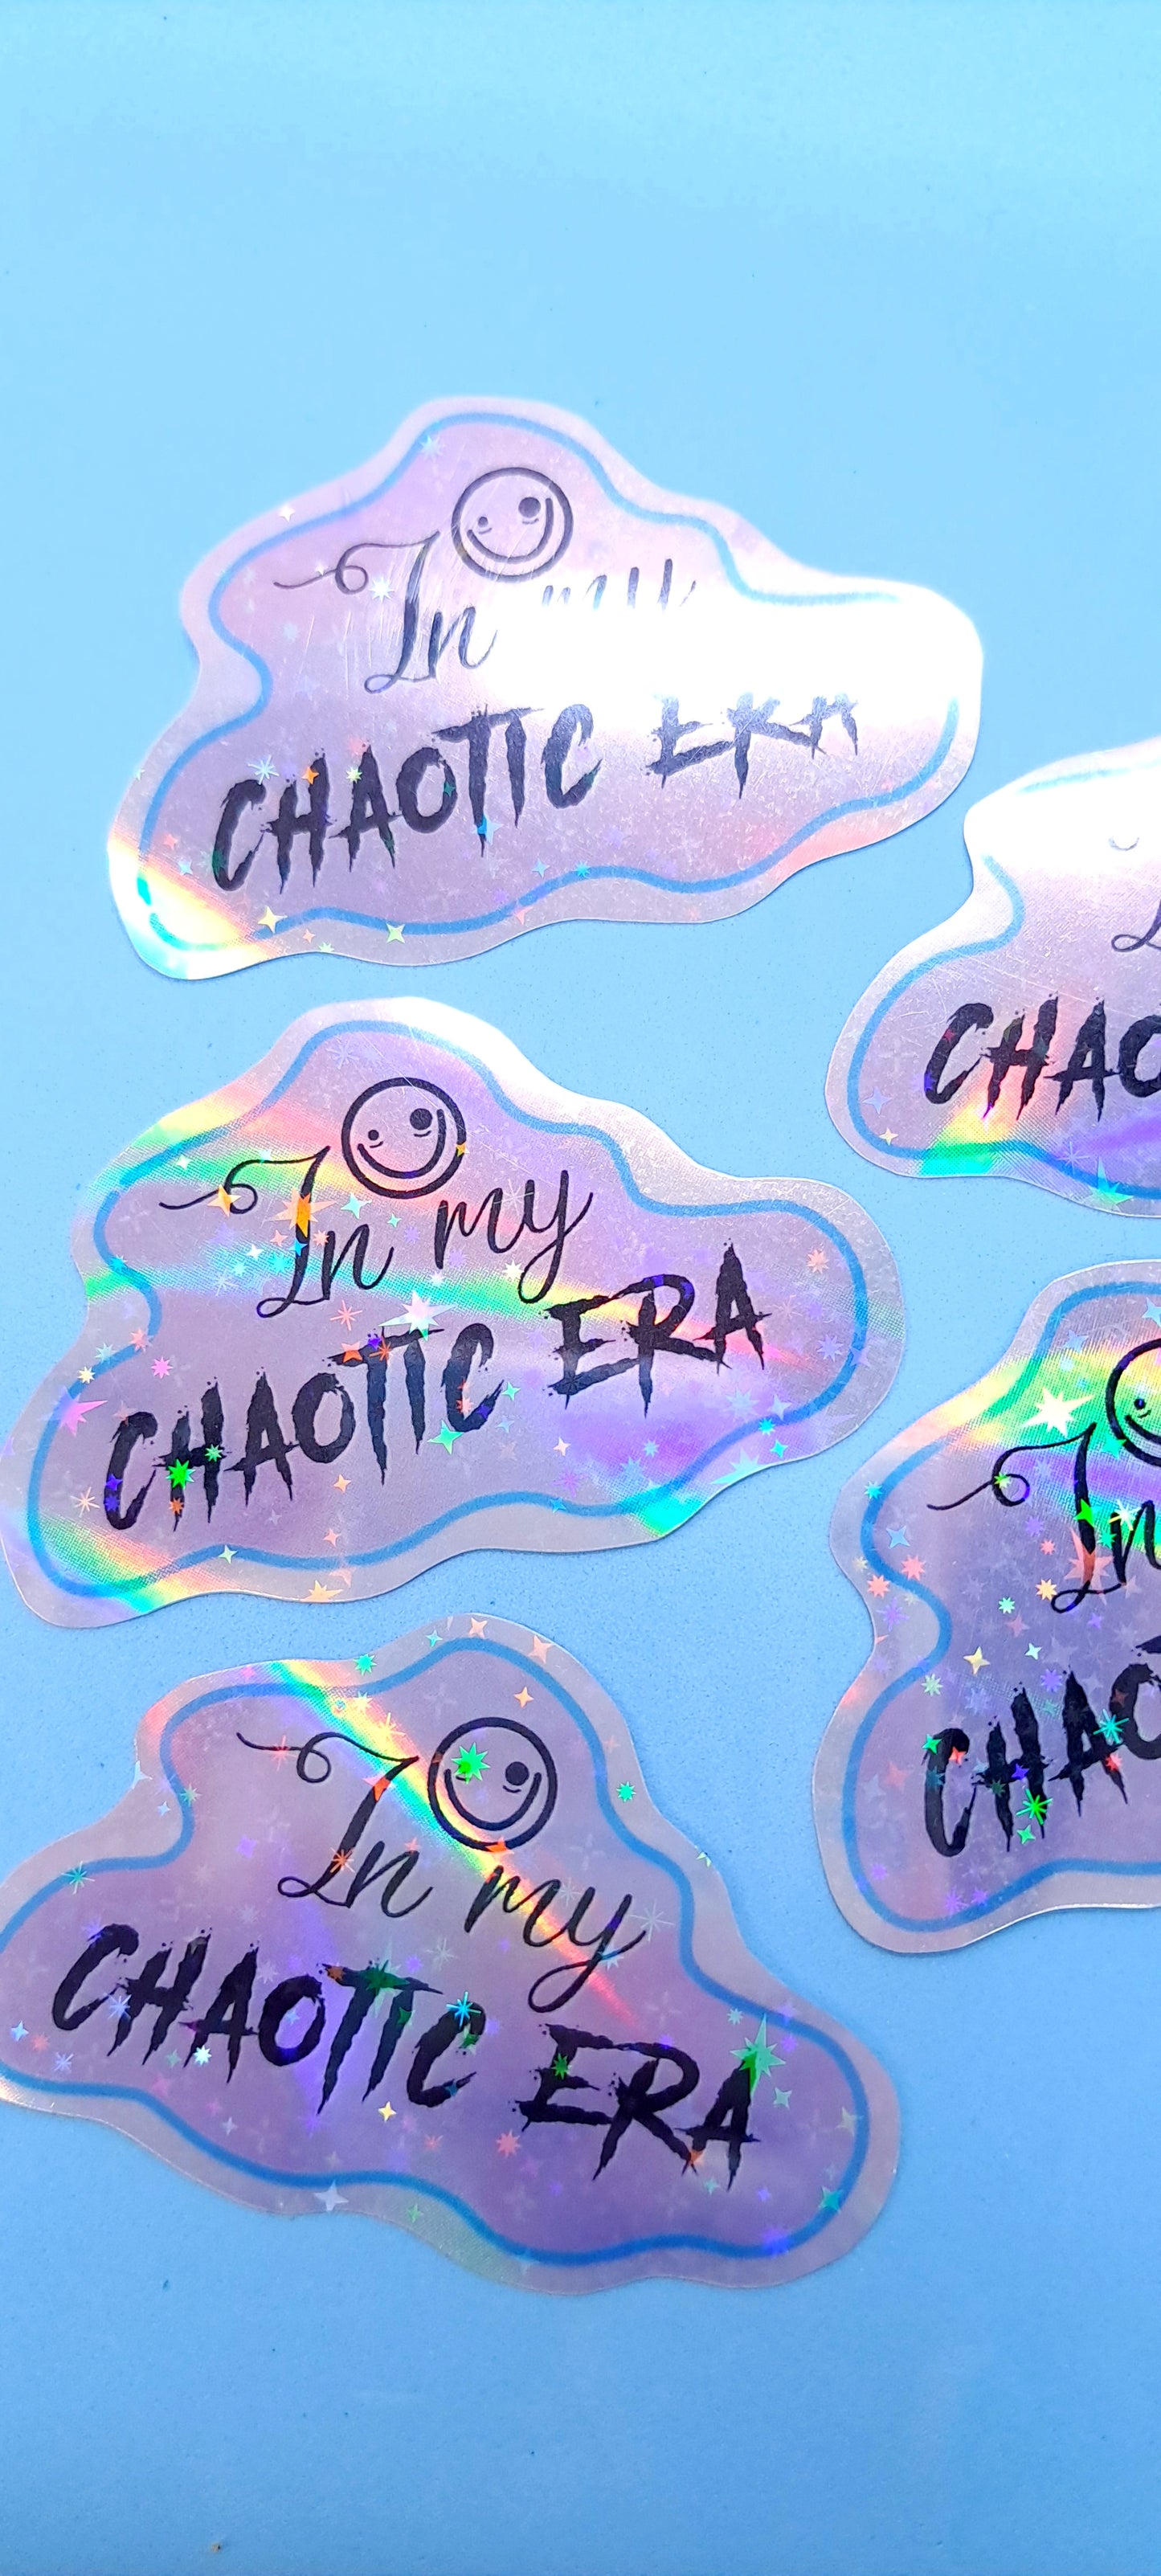 Chaotic Era Sticker